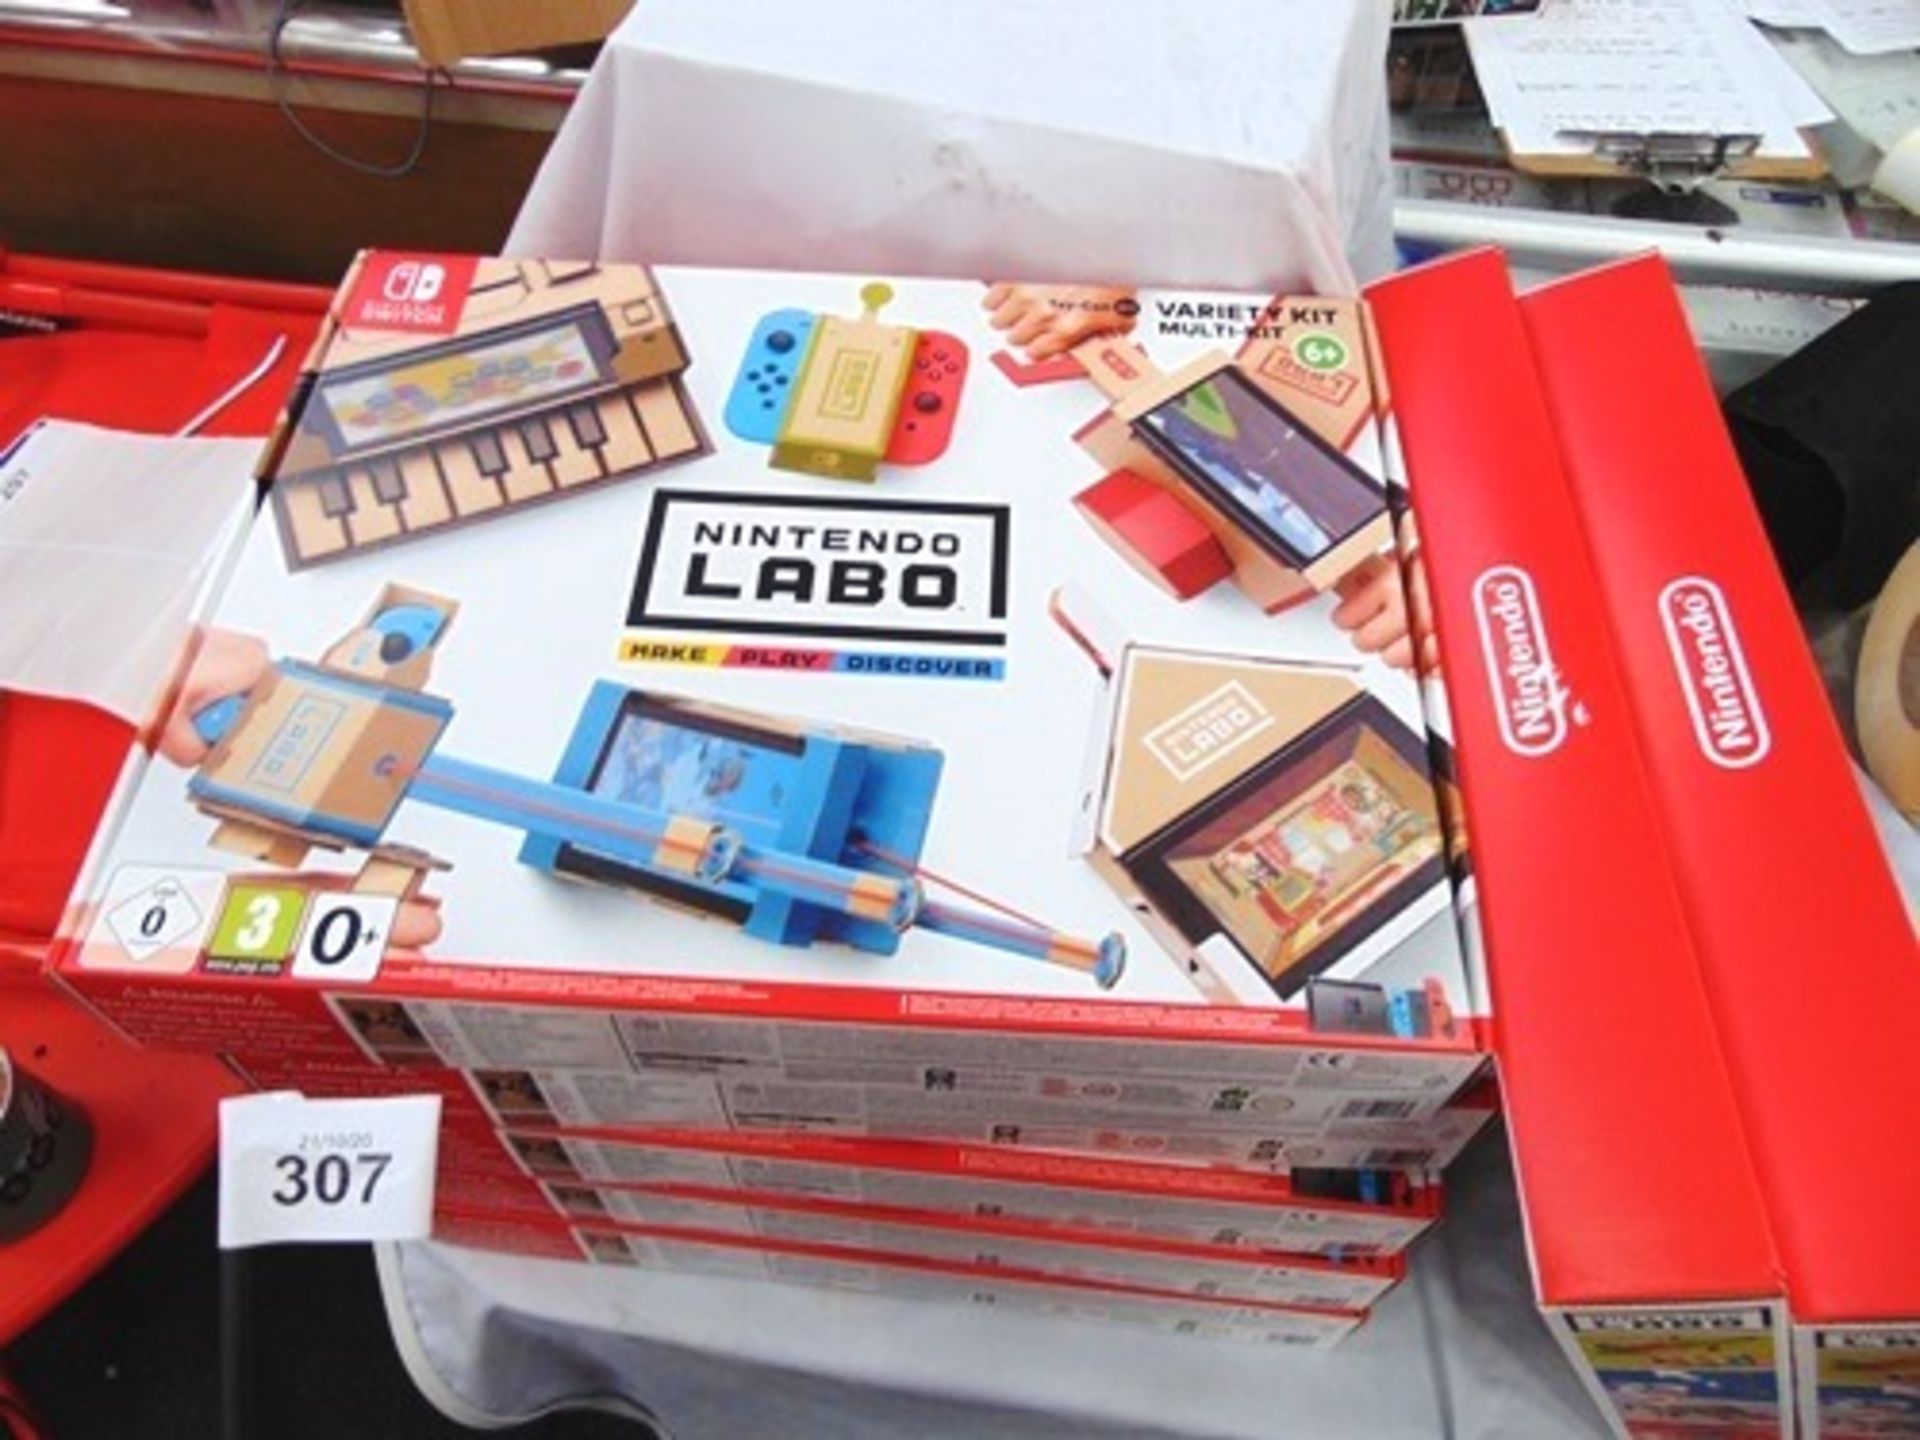 7 x Nintendo Labo Variety-Kit multi-kits for Nintendo Switch games console, Ref: 2522066B1 -